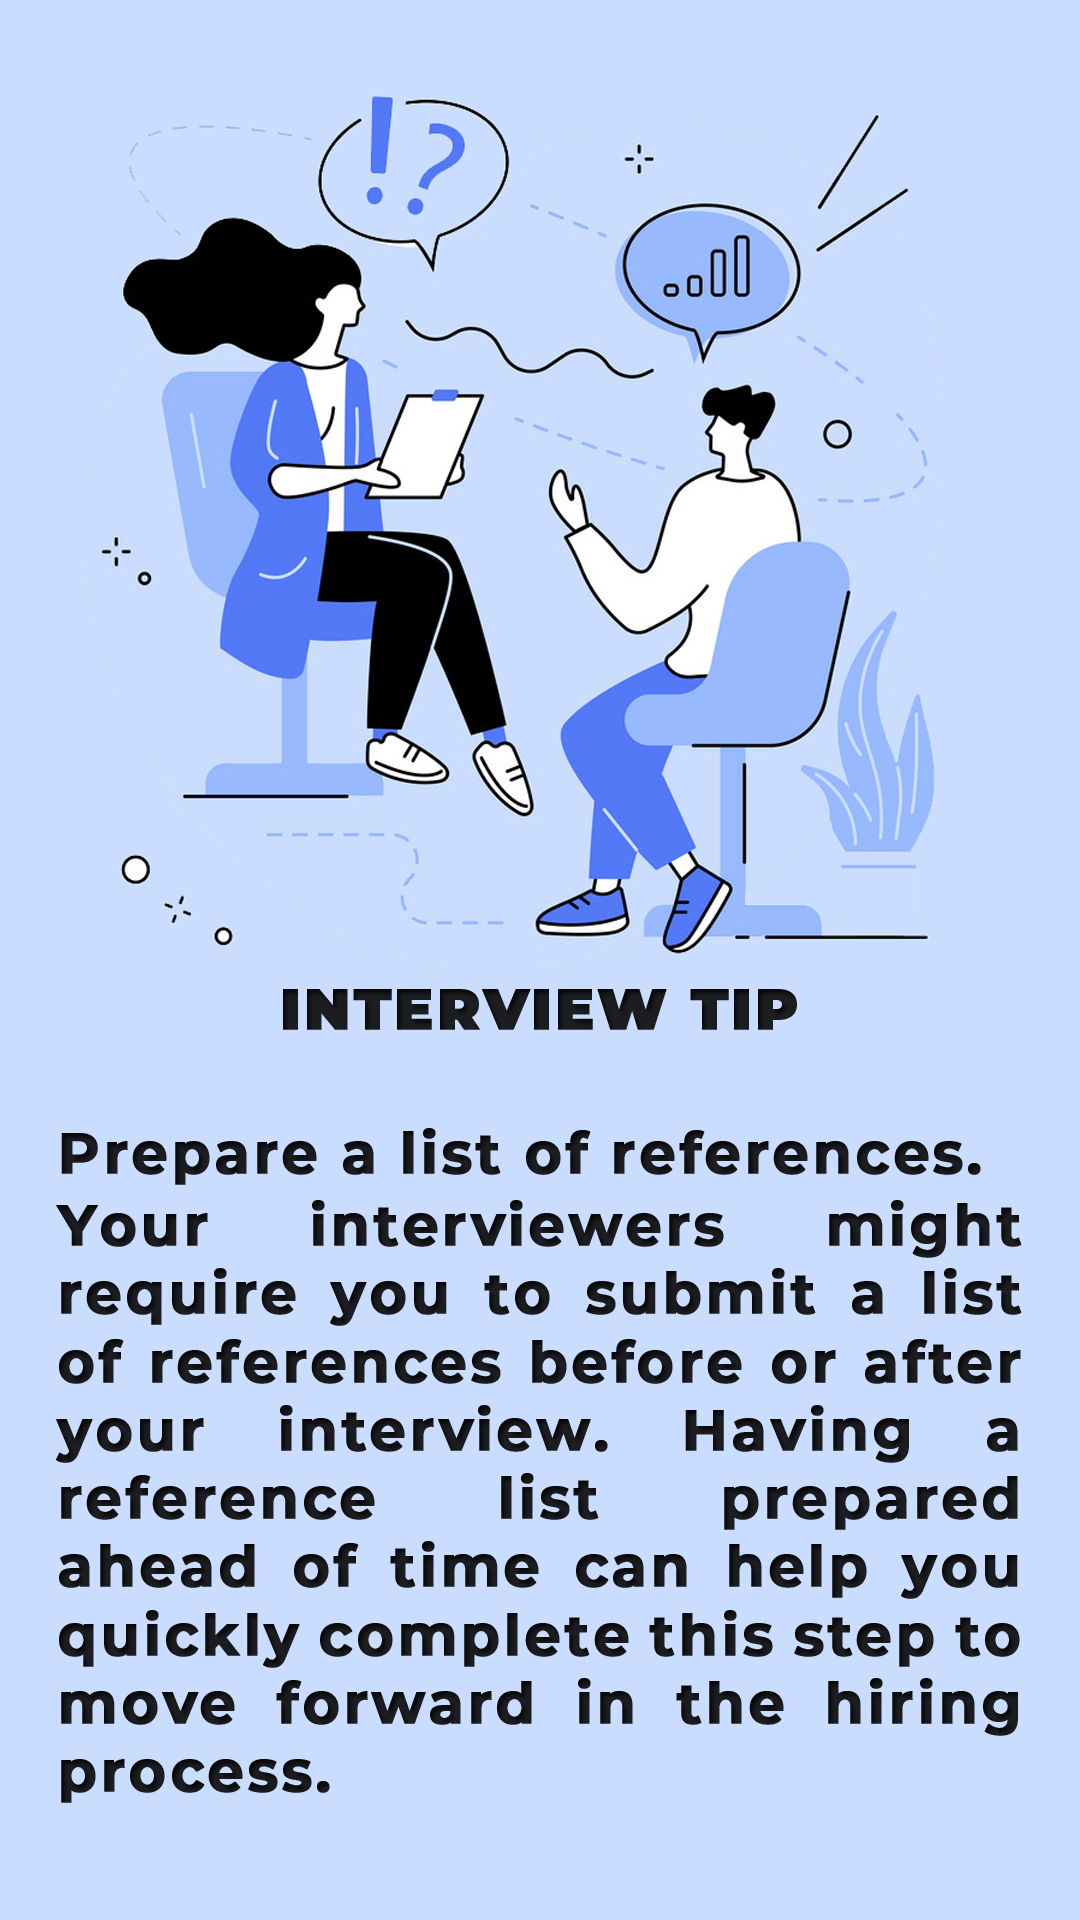 INTERVIEW TIP